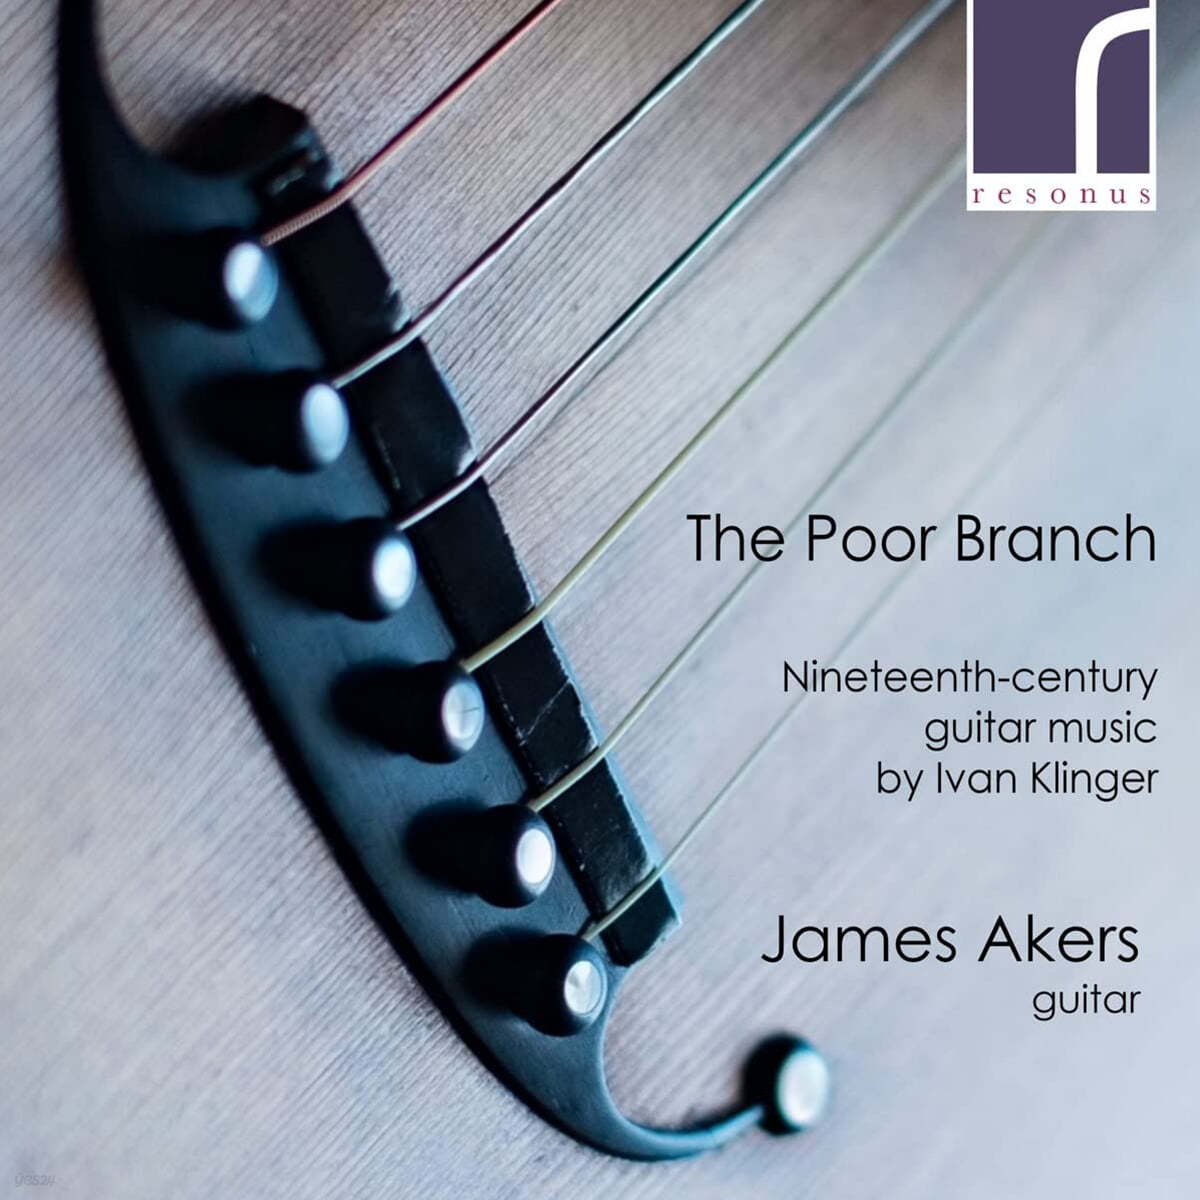 James Akers 클링어: 19세기 기타 음악 (The Poor Branch - Klinger: 19th Century Guitar Music)